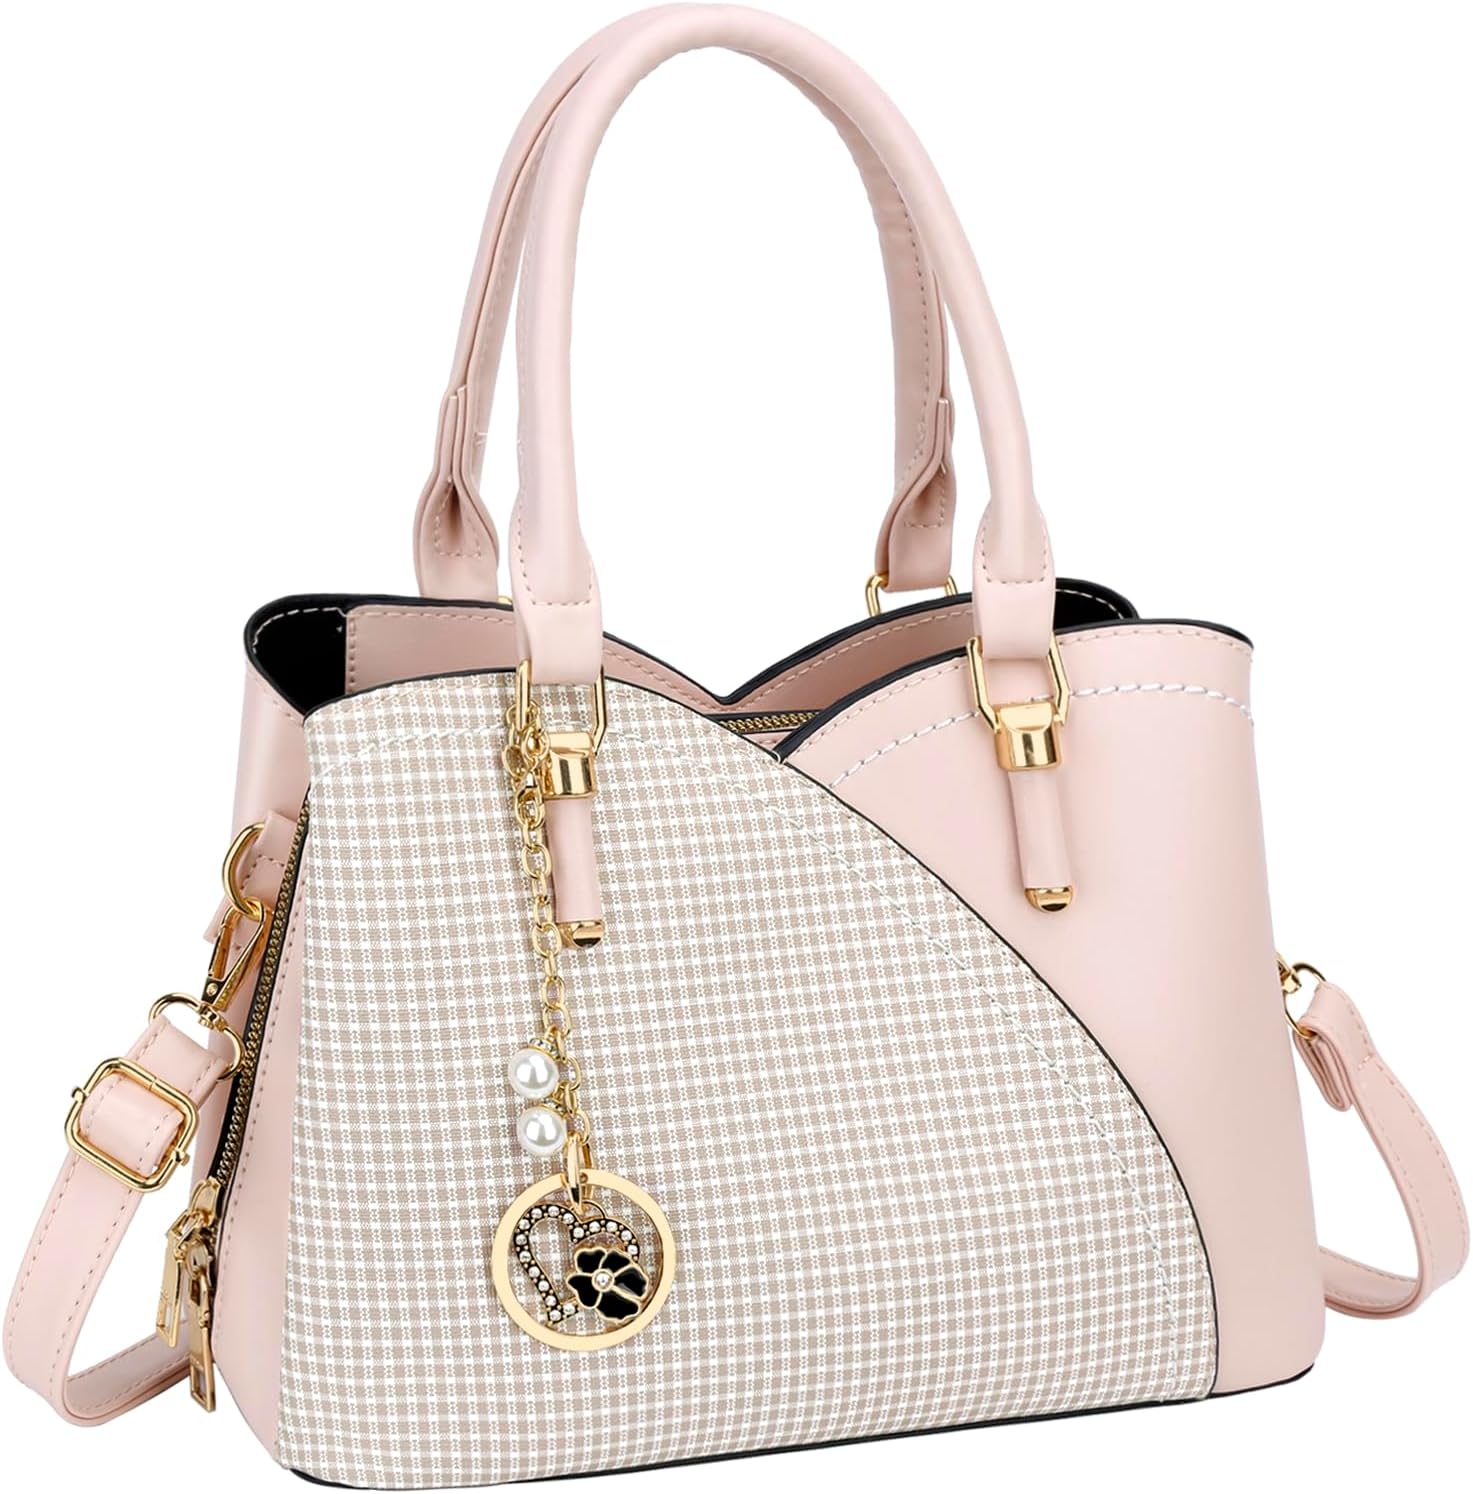 KKXIU Triple Compartments Purses and Handbags for Women Fashion Ladies Satchel Shoulder Top Handle Bag